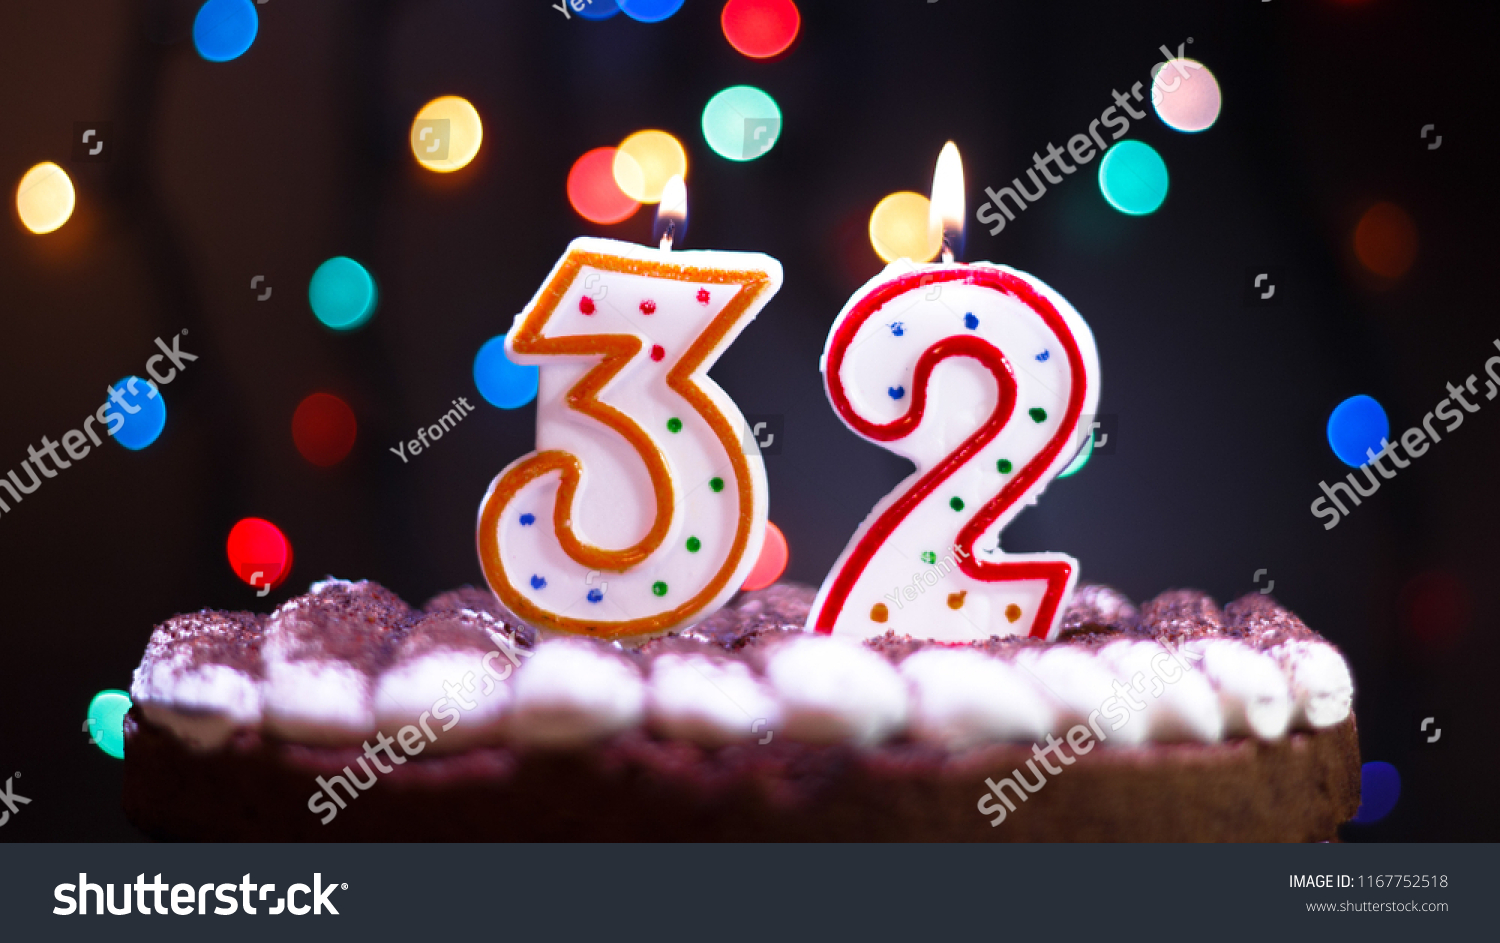 89 Happy Birthday Stop Motion Images, Stock Photos & Vectors | Shutterstock